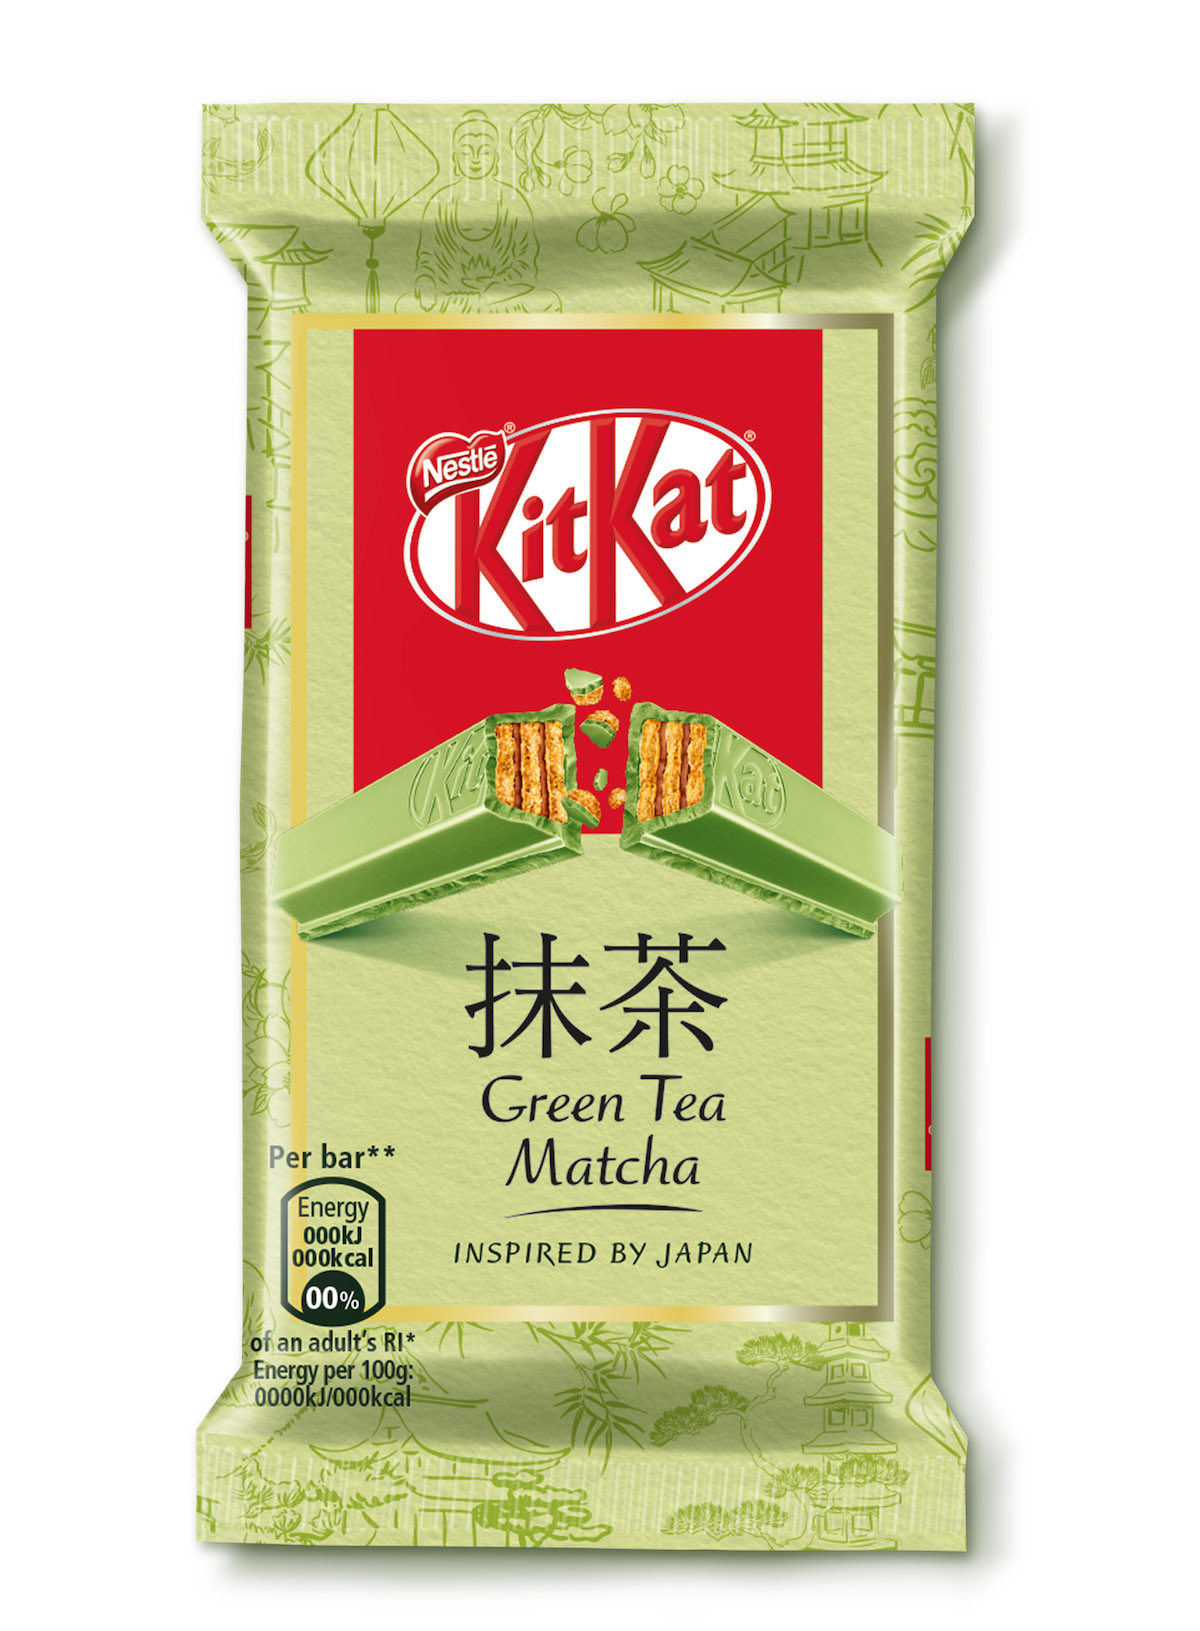 Kitkat-green-tea-matcha.jpg